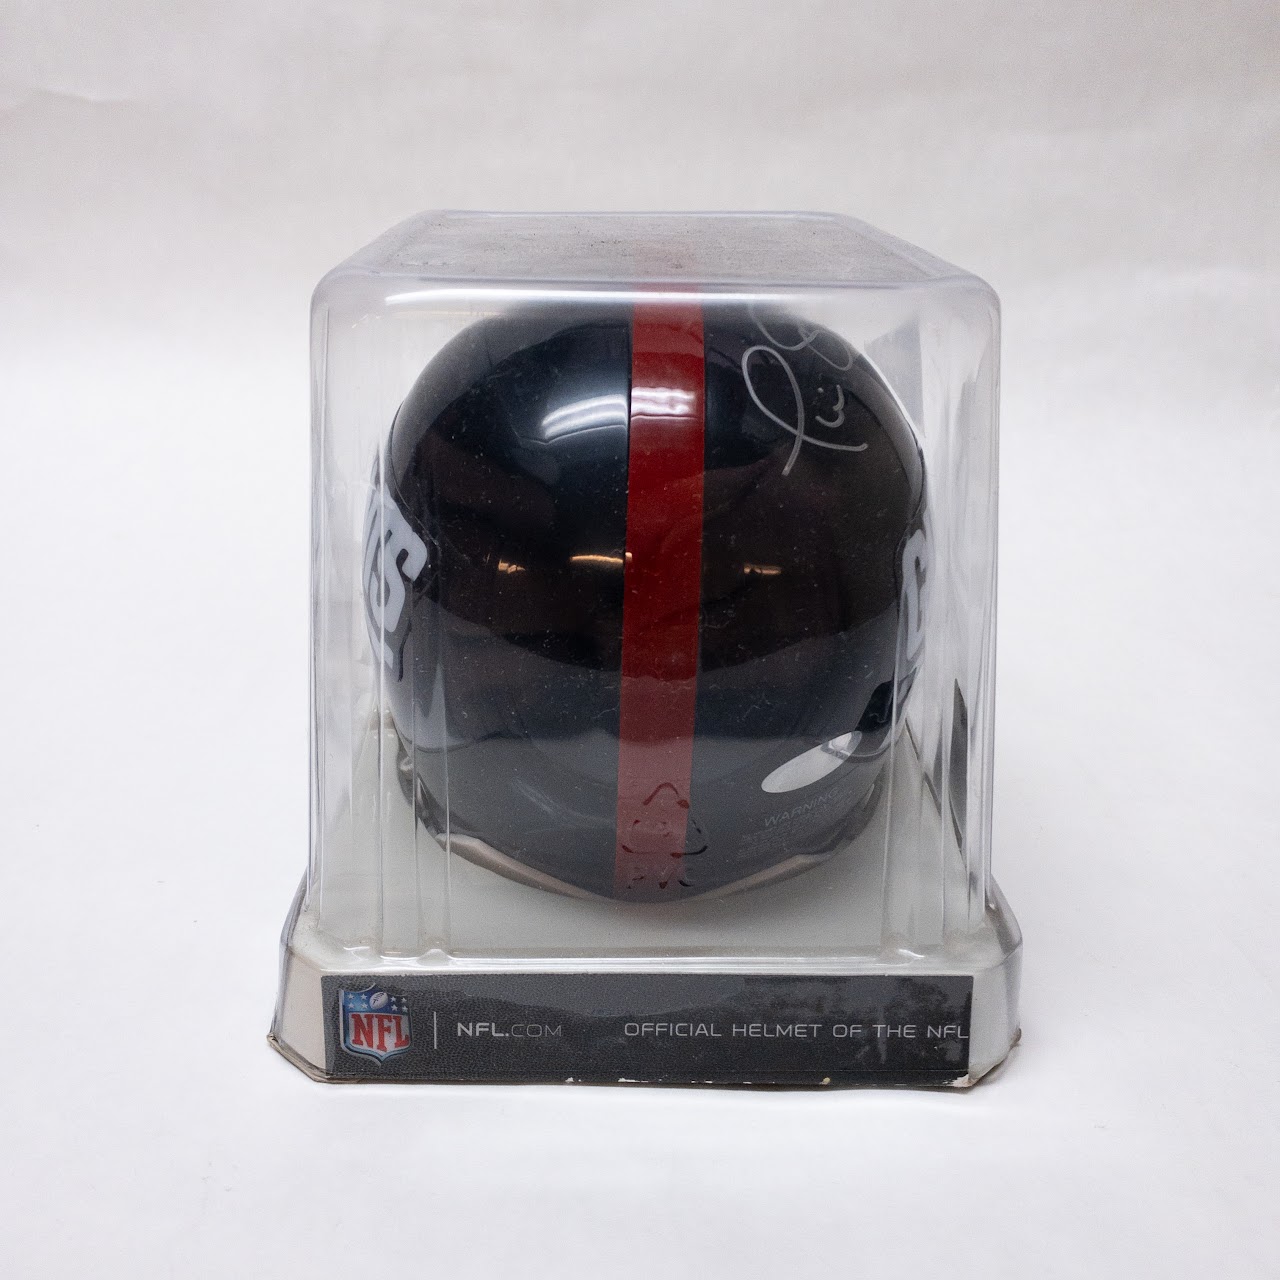 Phil Simms Giants Throwback Replica Mini Helmet with Super Bowl 21 Inscription